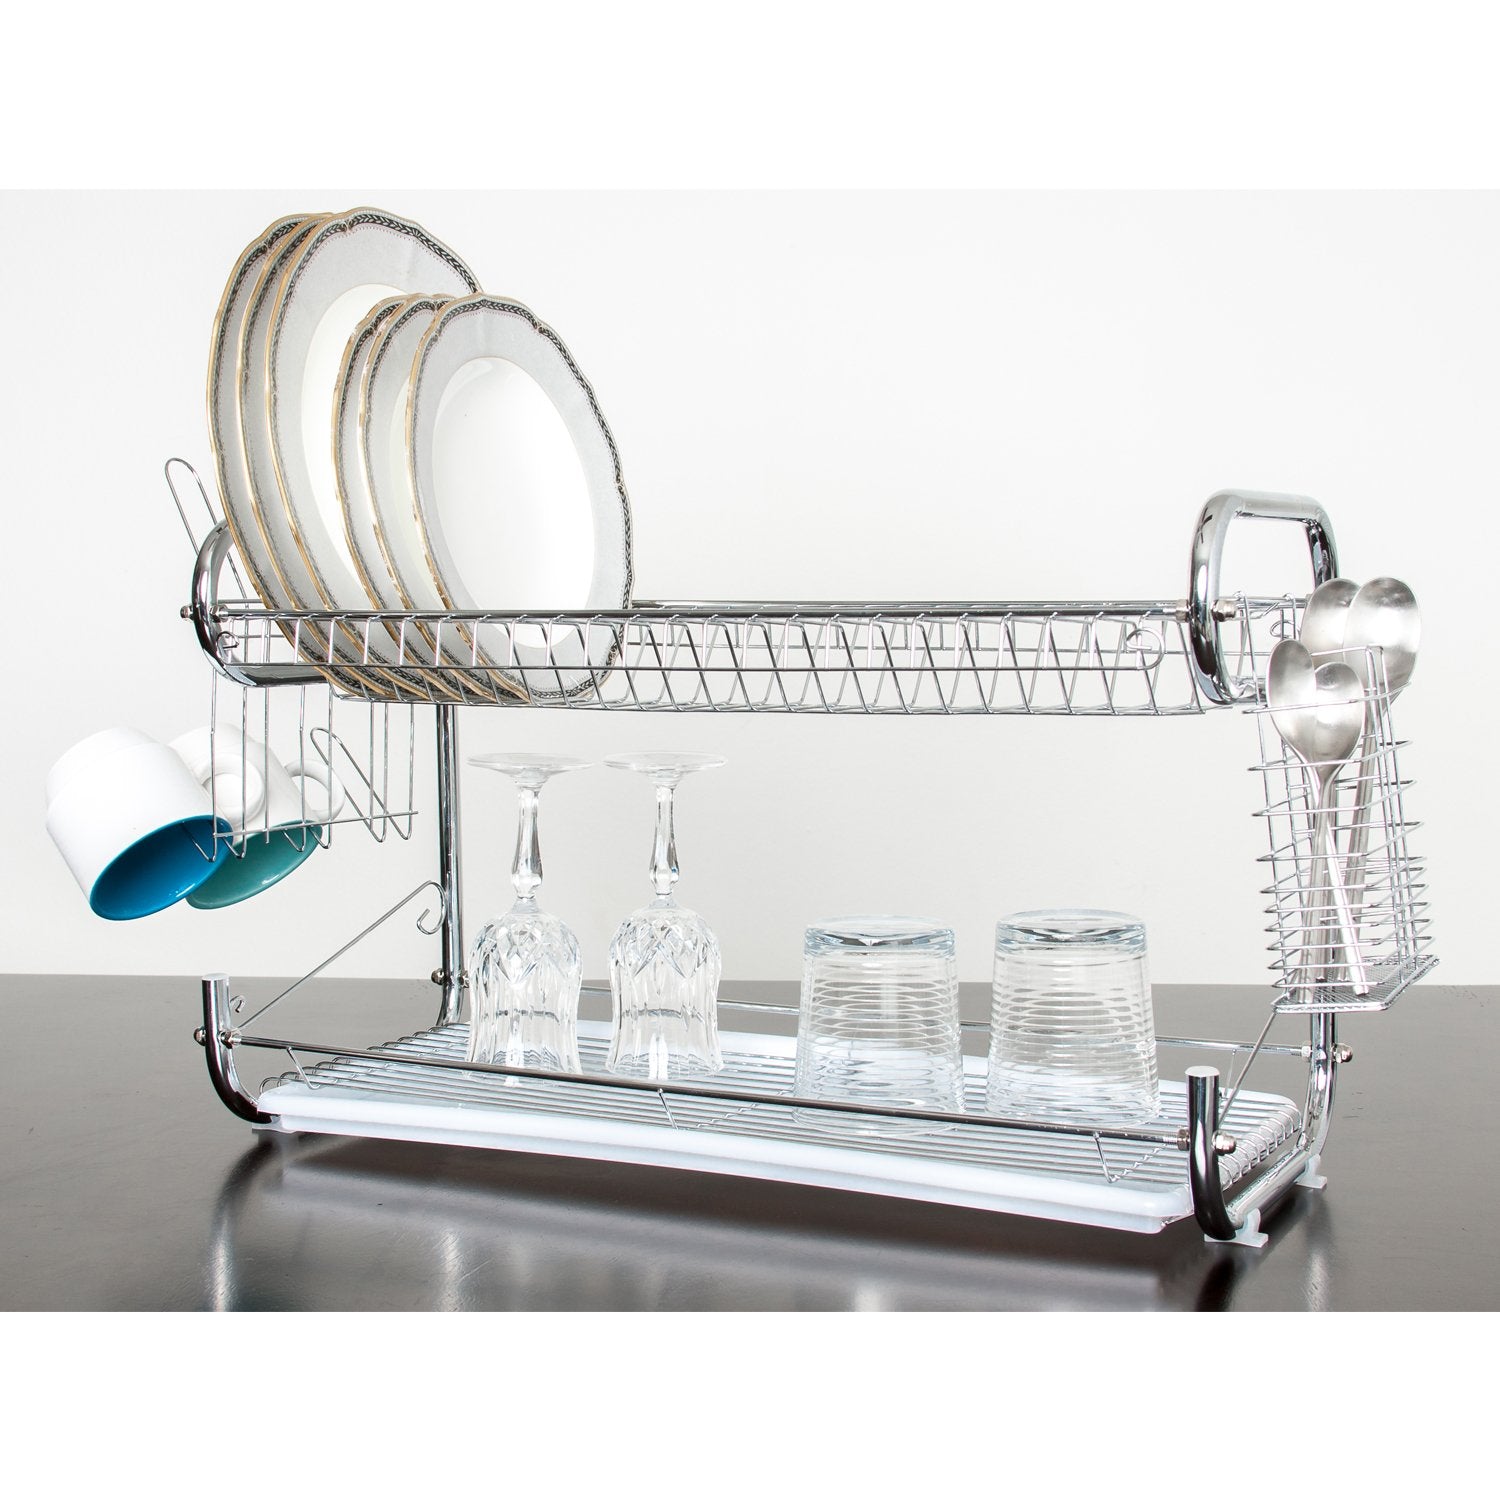 22 Inch Dish Drainer Rack - 2 Tier Dish Holder Dish Rack Organizer – Chrome Plate Dish Drying Rack